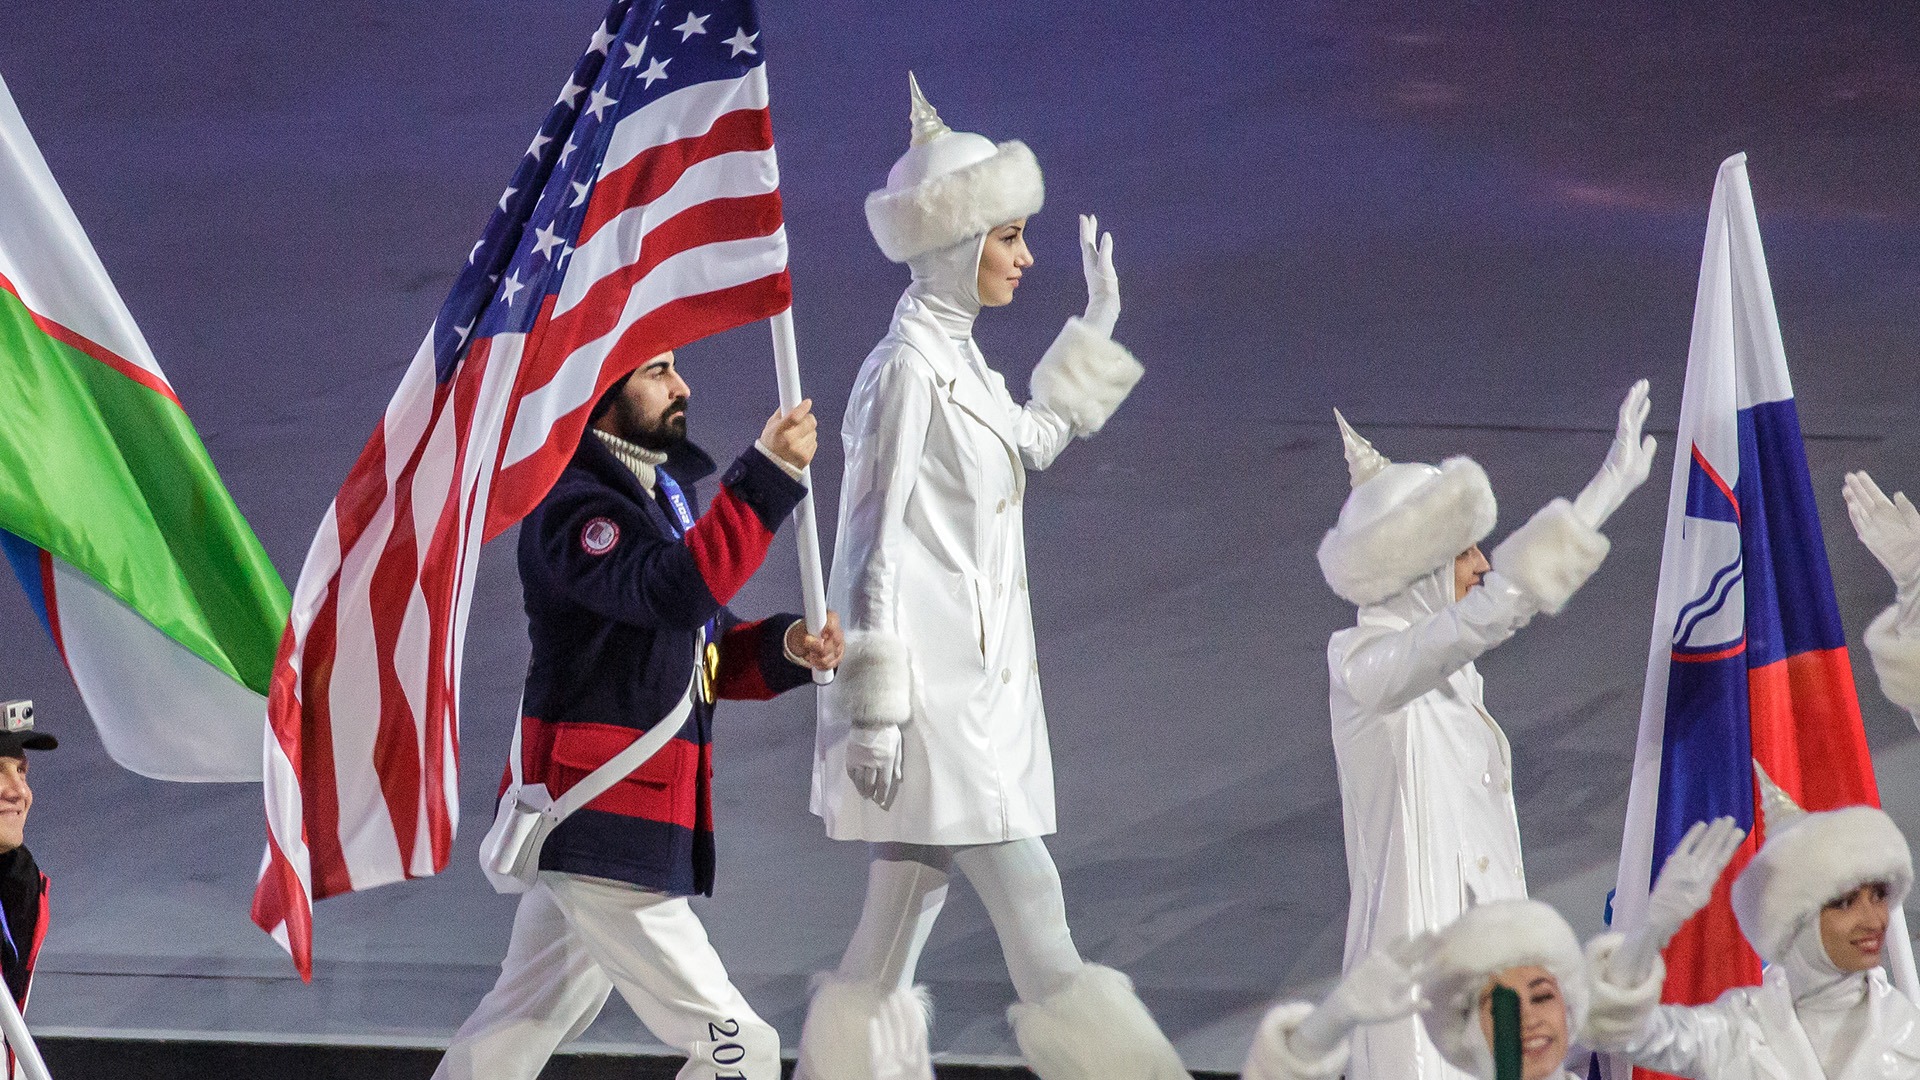 Steve Cash holds aloft the U.S. flag as he walks into the stadium